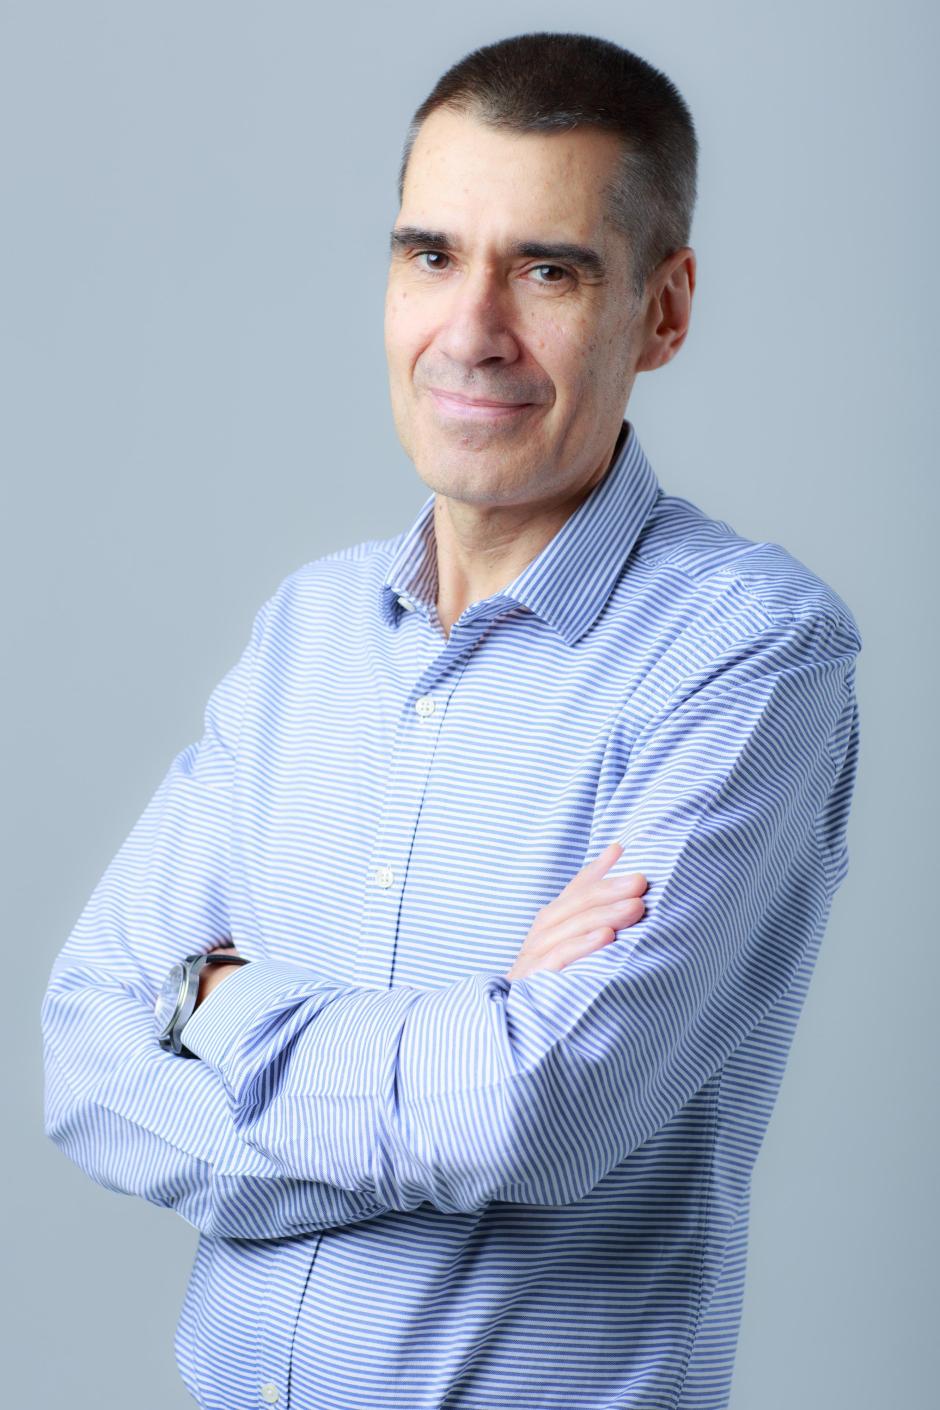 Carlos Fernández